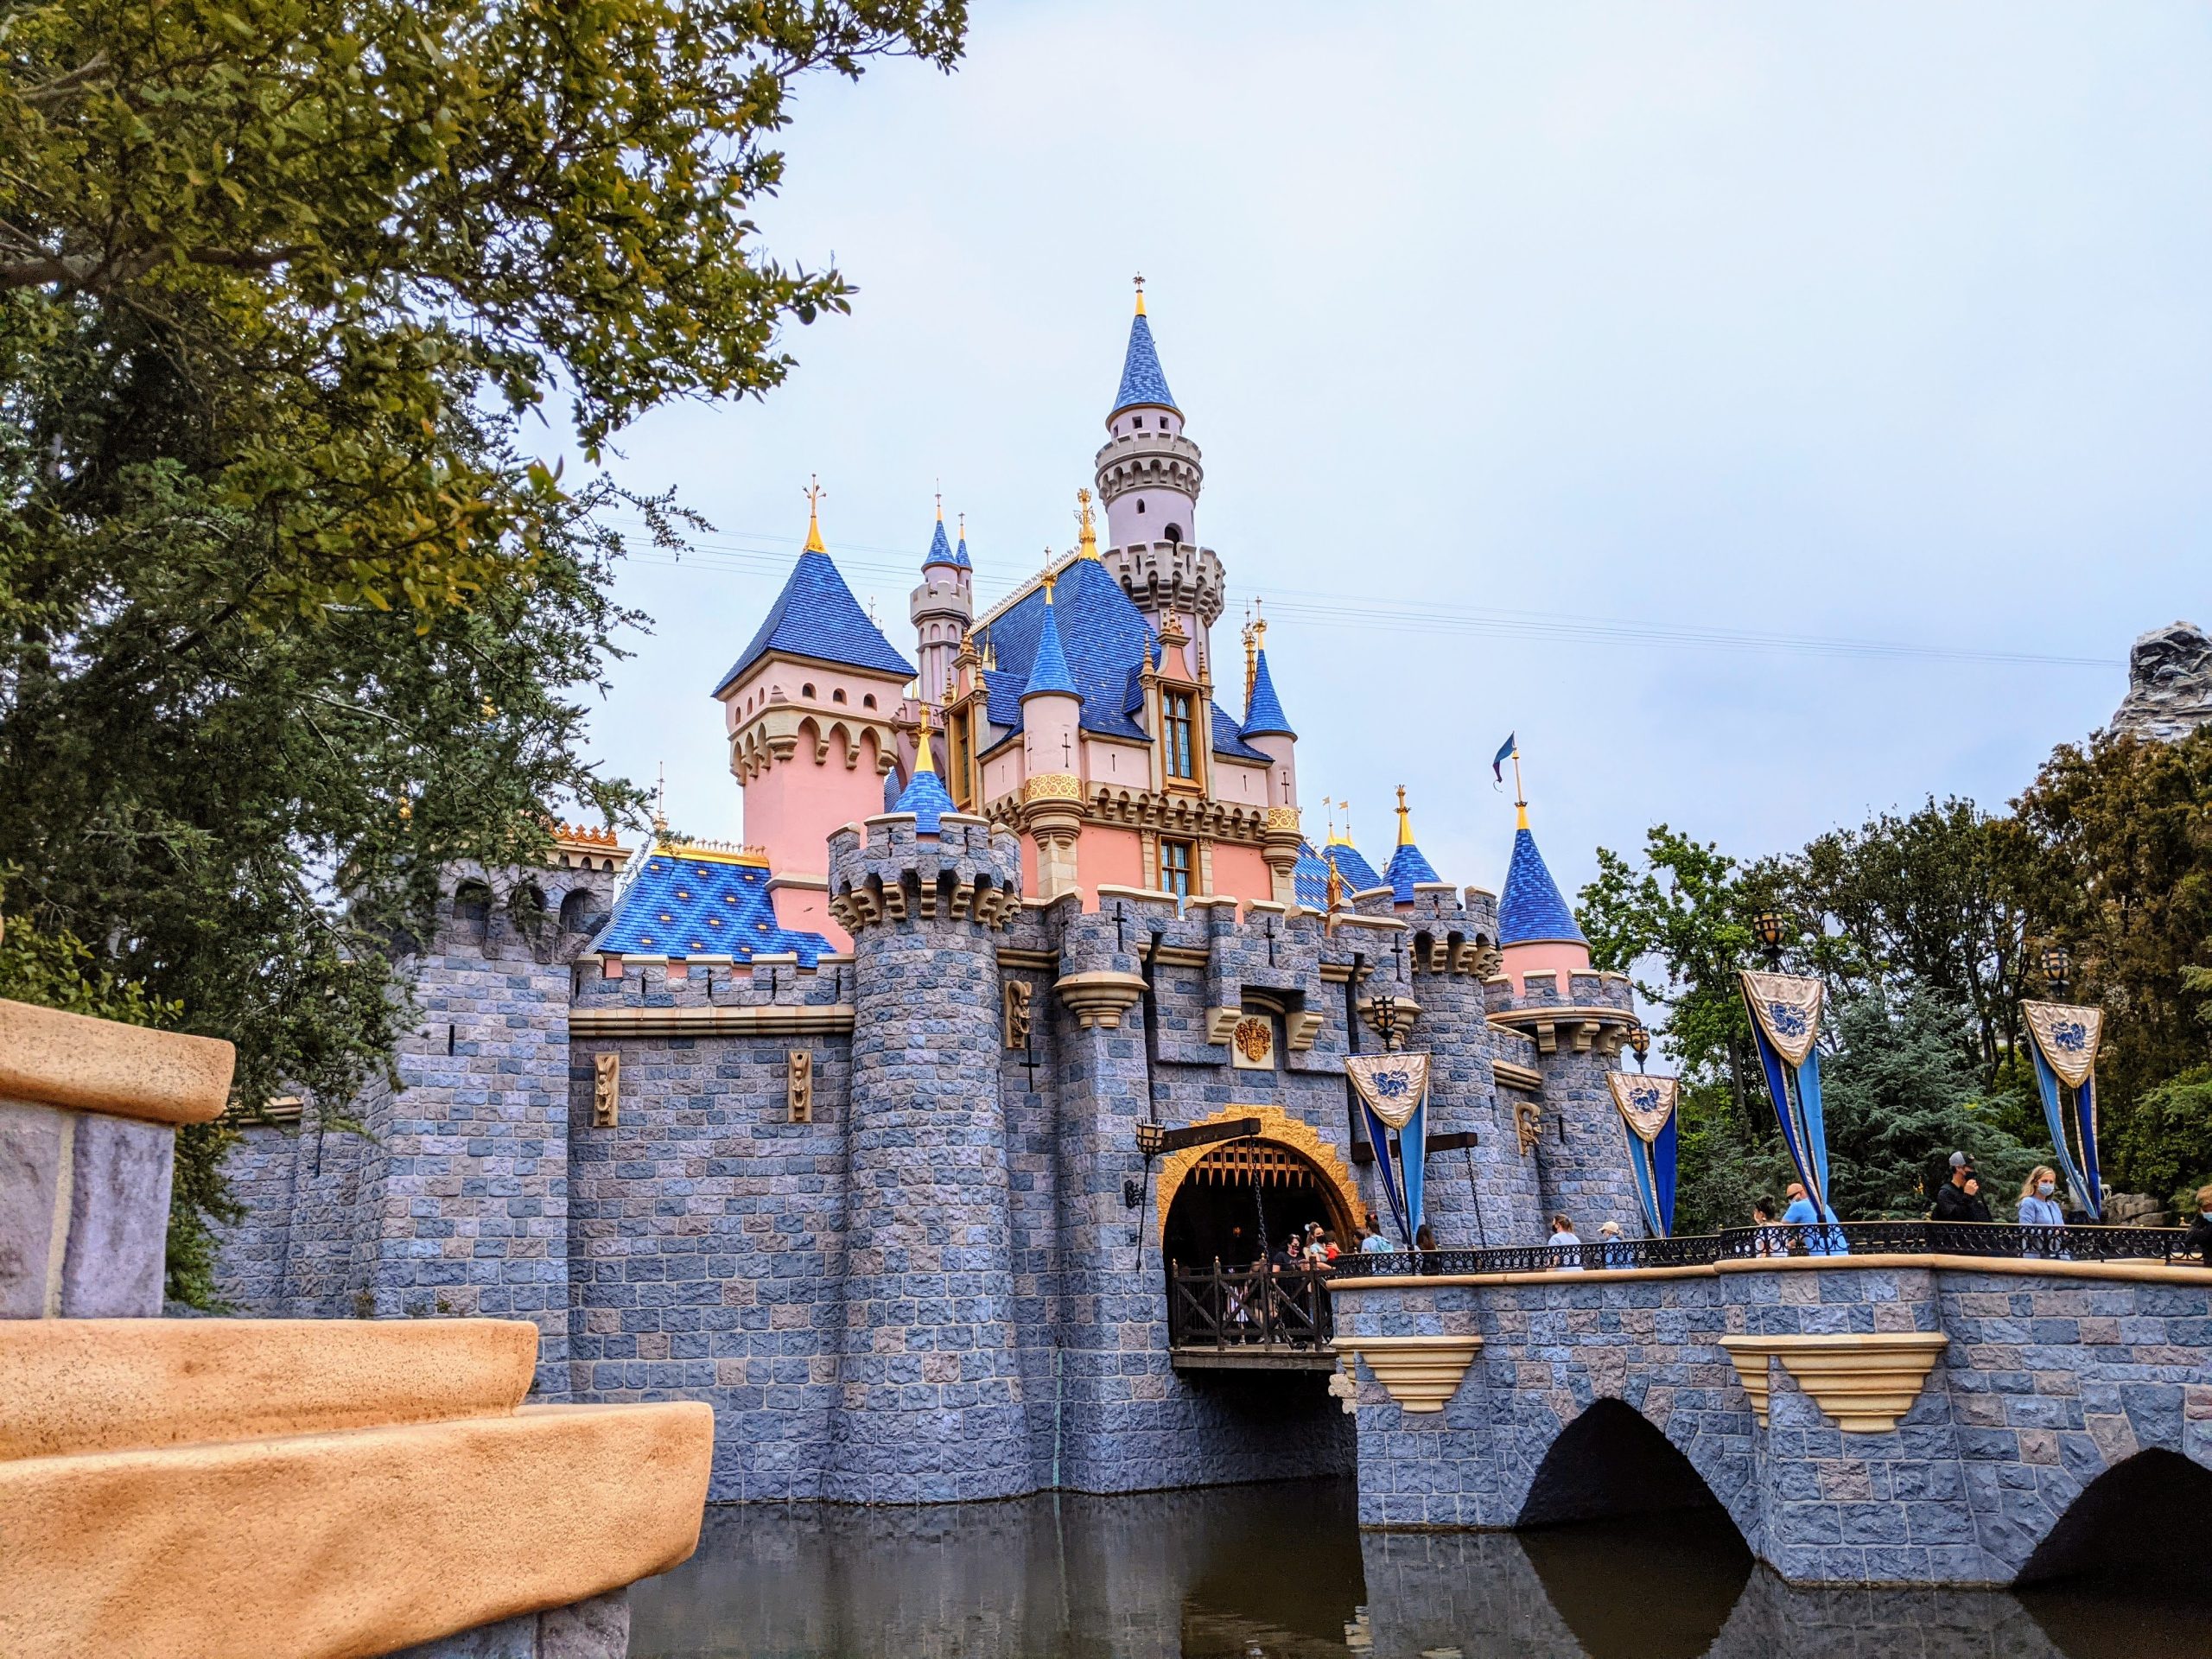 Sleeping Beauty Castle At Disneyland